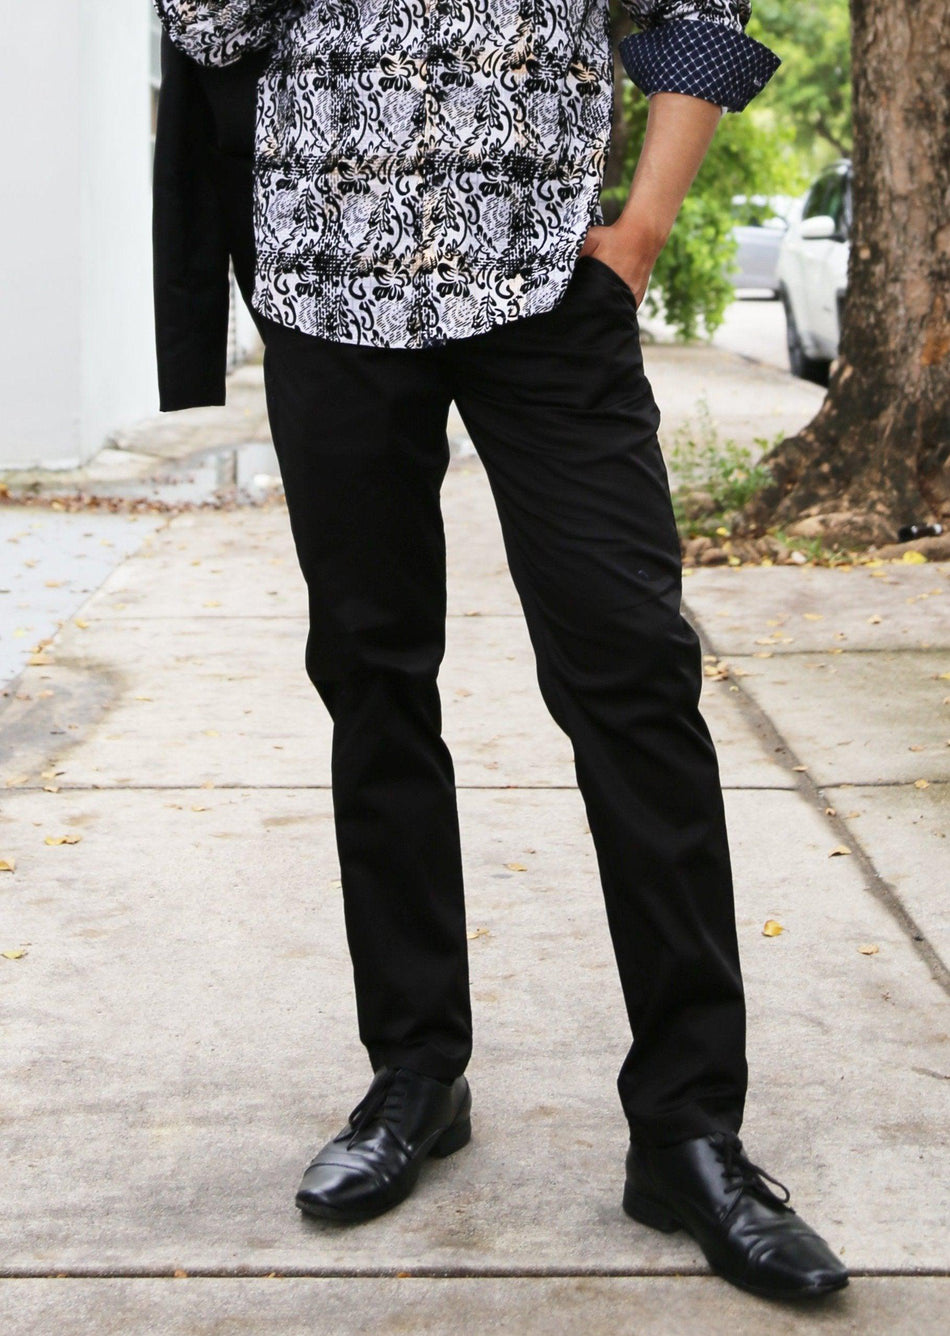 Men's Bespoke Custom Tailored Black Dress Pants In Cashmere